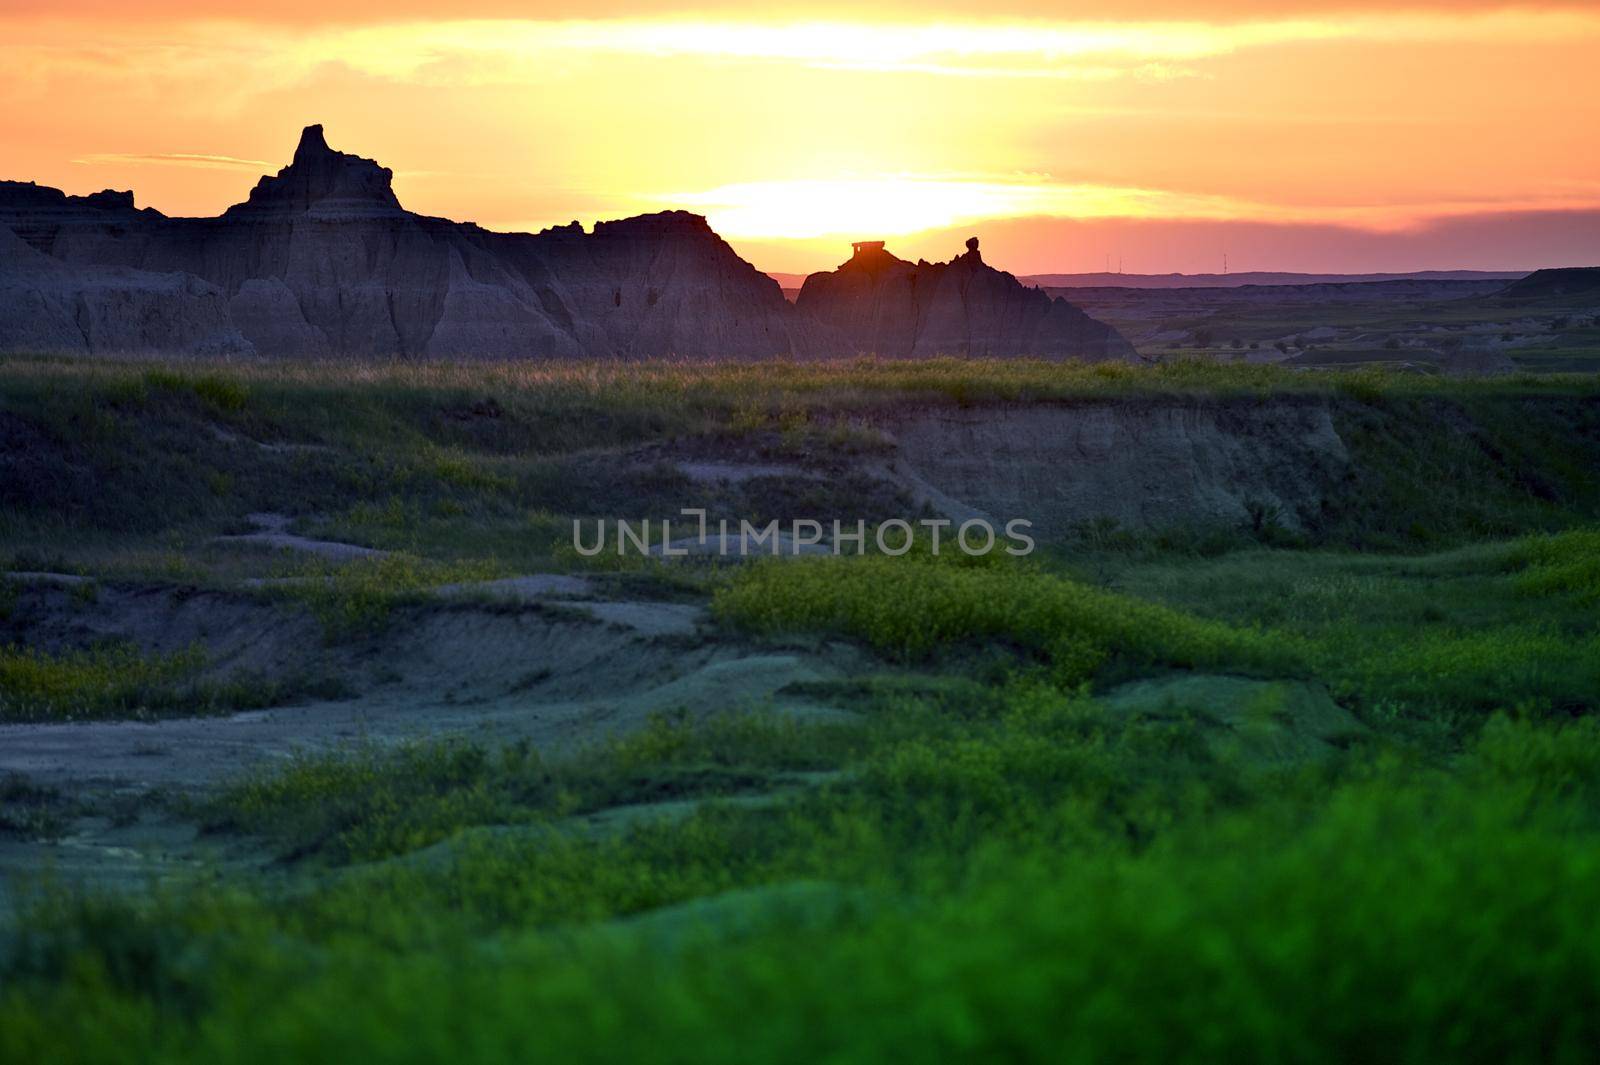 Badlands Sunset Scenery, South Dakota, USA. Nature Wonders Photo Collection by welcomia